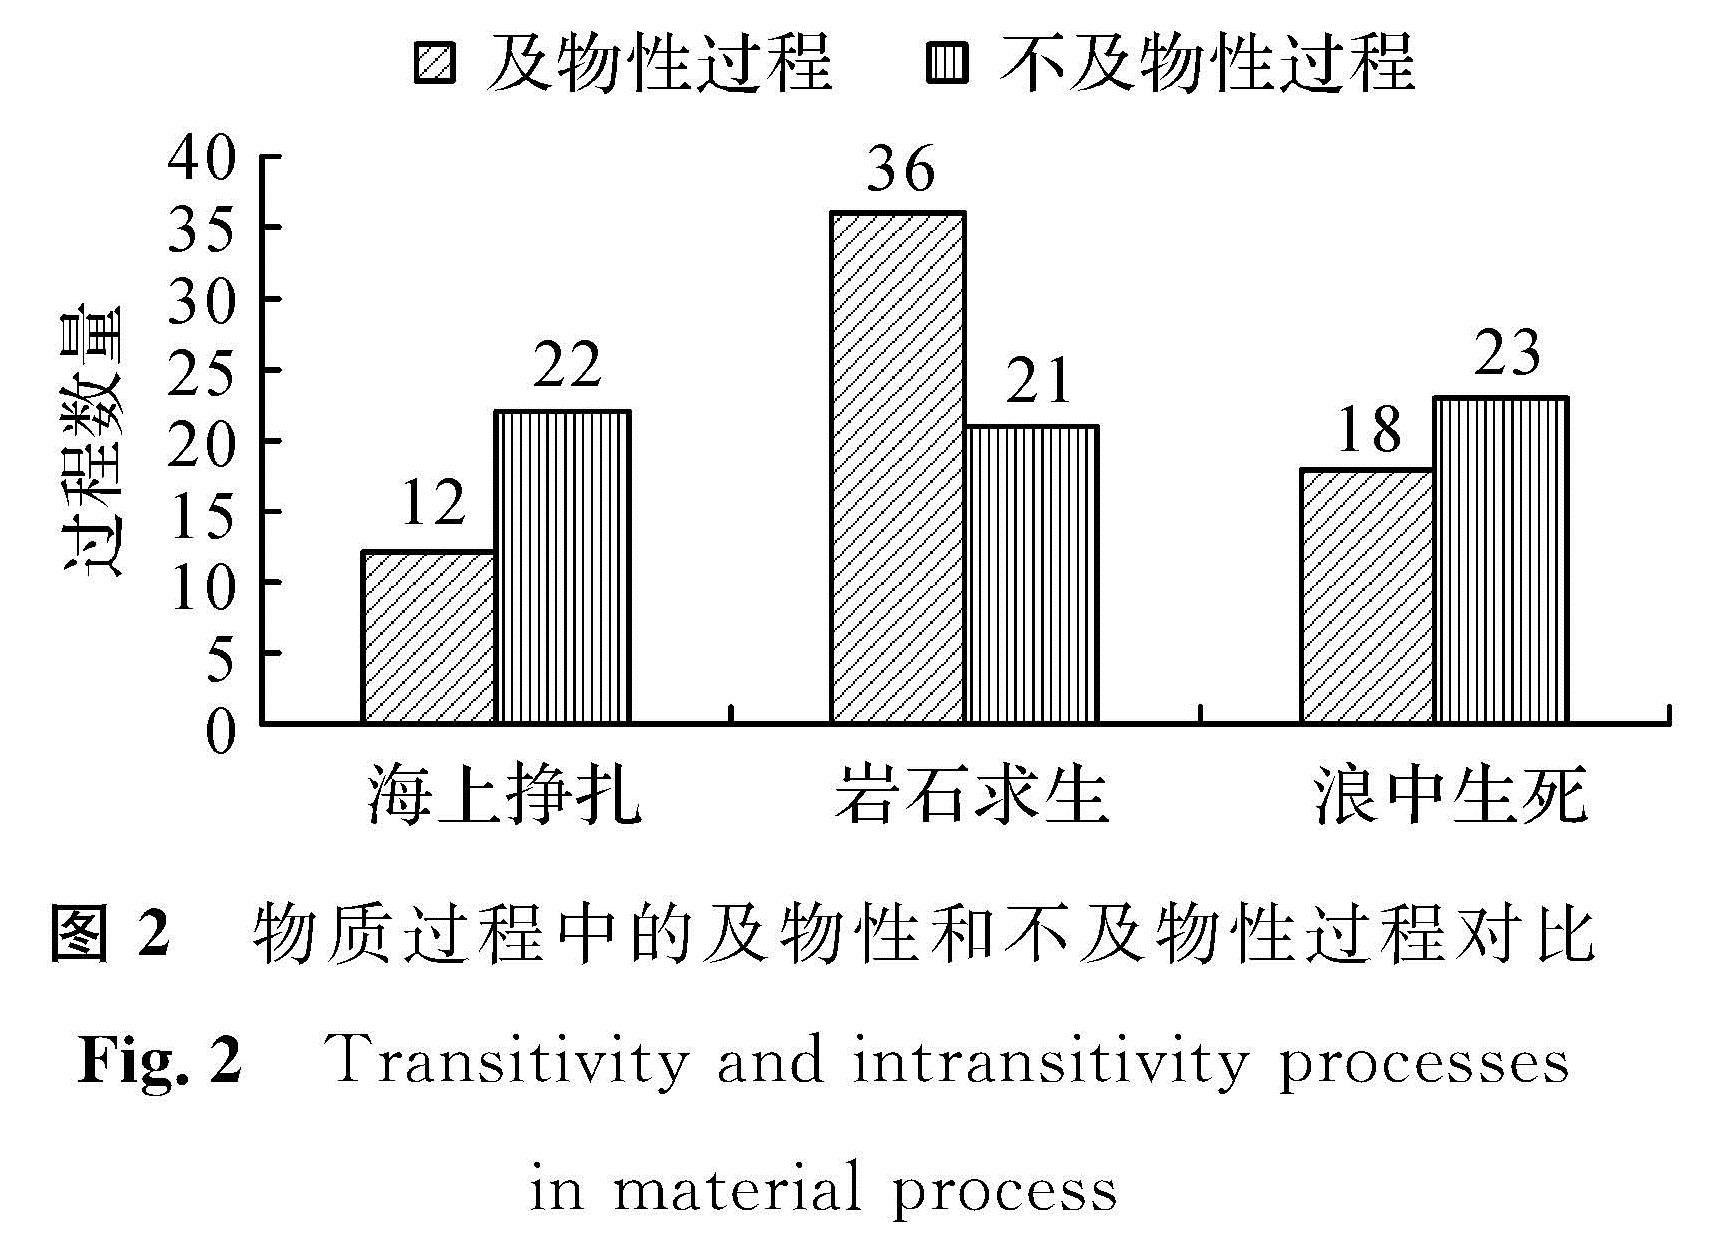 图2 物质过程中的及物性和不及物性过程对比<br/>Fig.2 Transitivity and intransitivity processes in material process